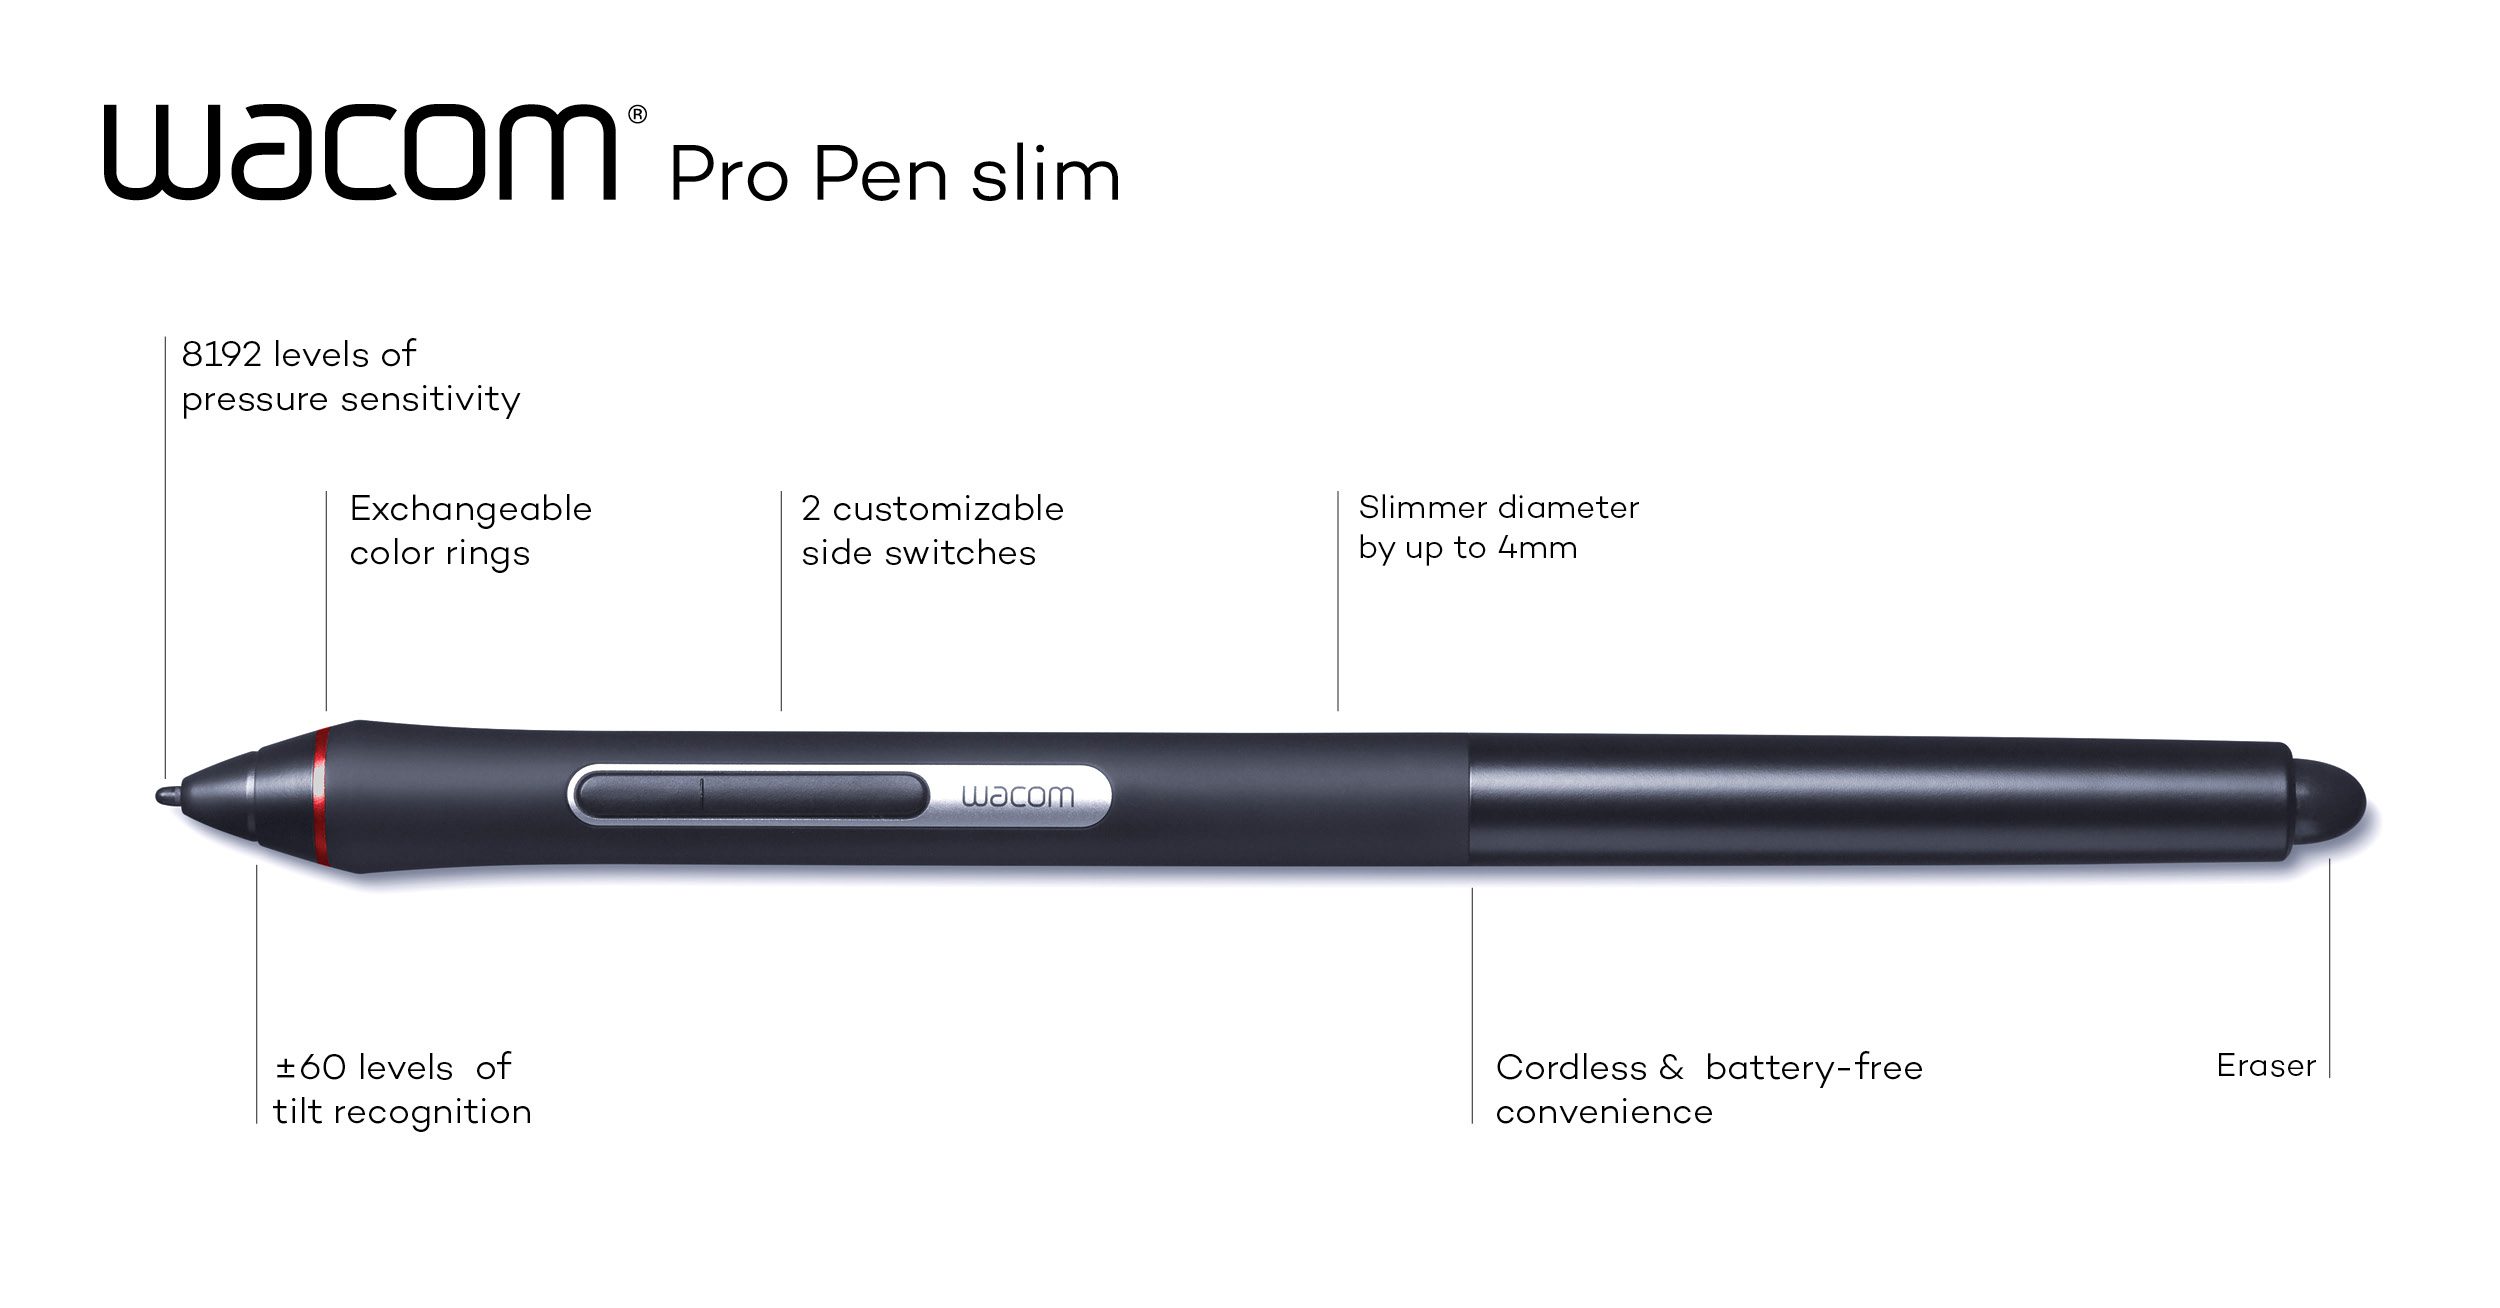 New Pro Pen slim joins Wacom's professional pen portfolio - Wacom 